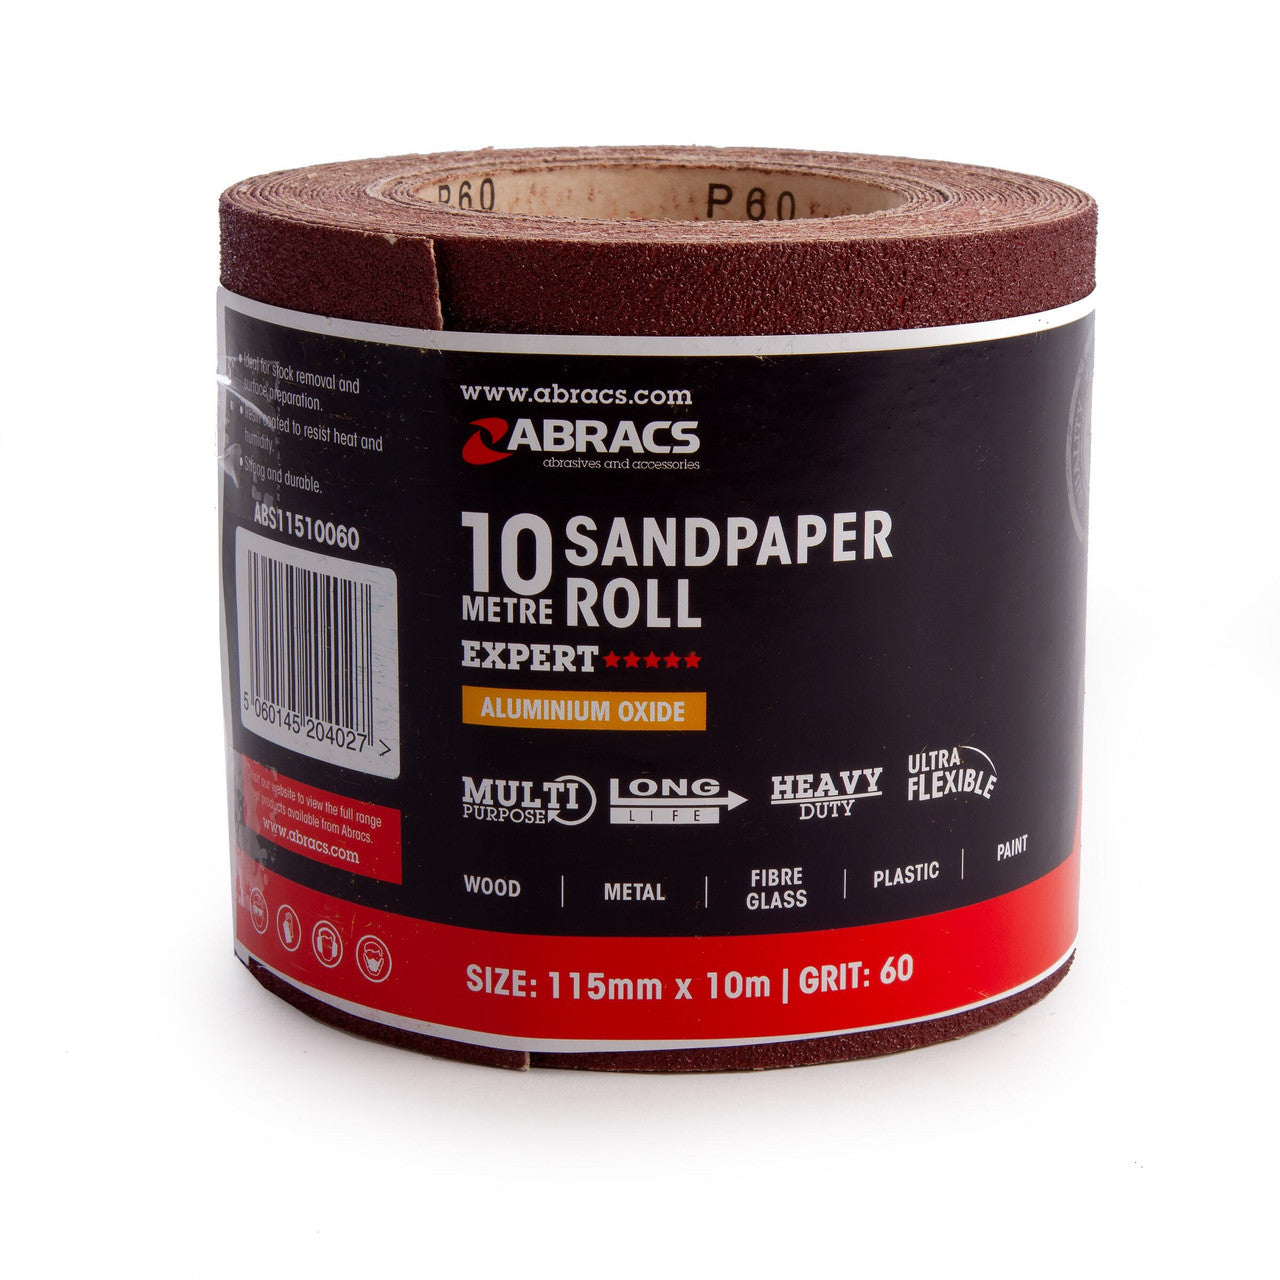 Abracs ABS11510060 Sandpaper Roll 60 Grit 115mm x 10m